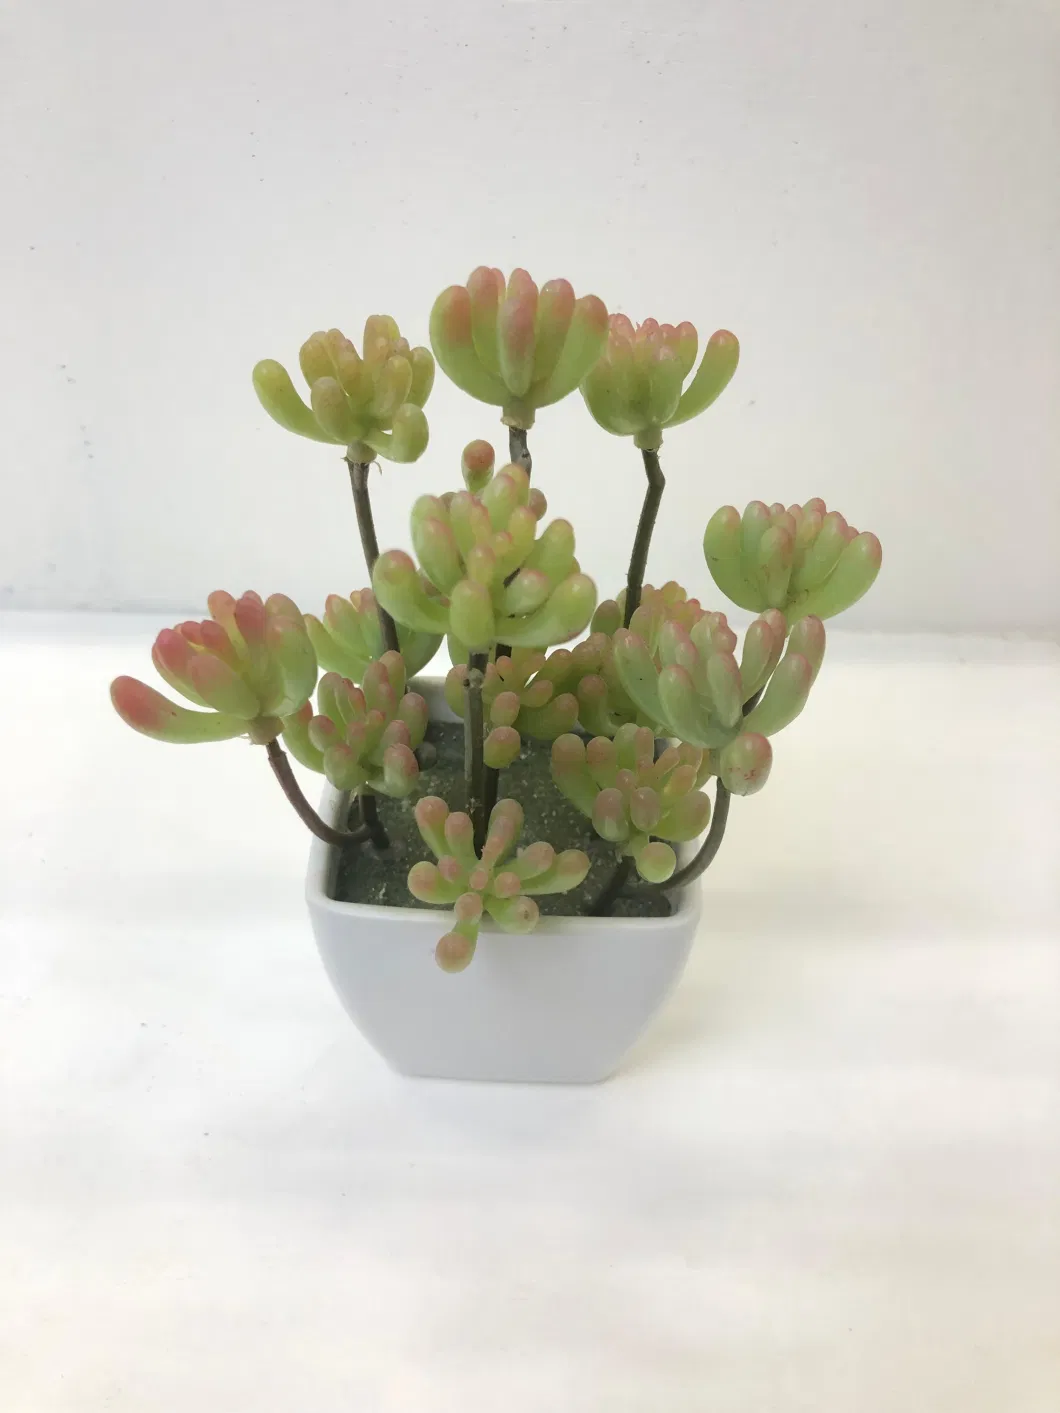 Colorful Plastic Decorative Artificial Succulent Plants for Home Office Table